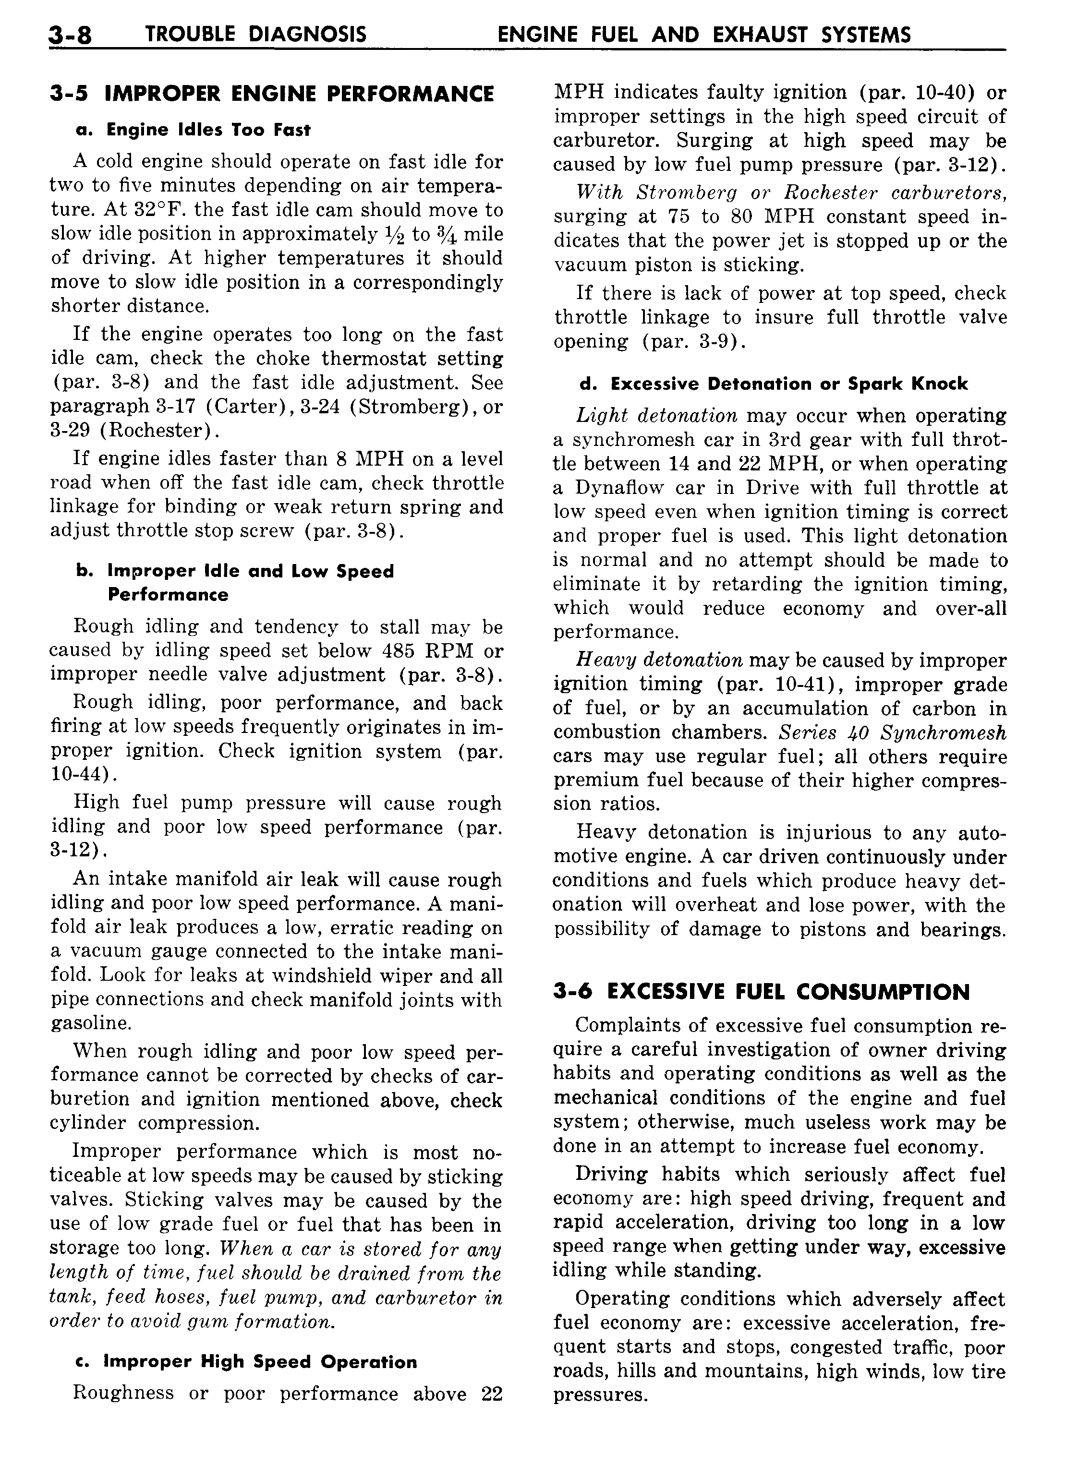 n_04 1957 Buick Shop Manual - Engine Fuel & Exhaust-008-008.jpg